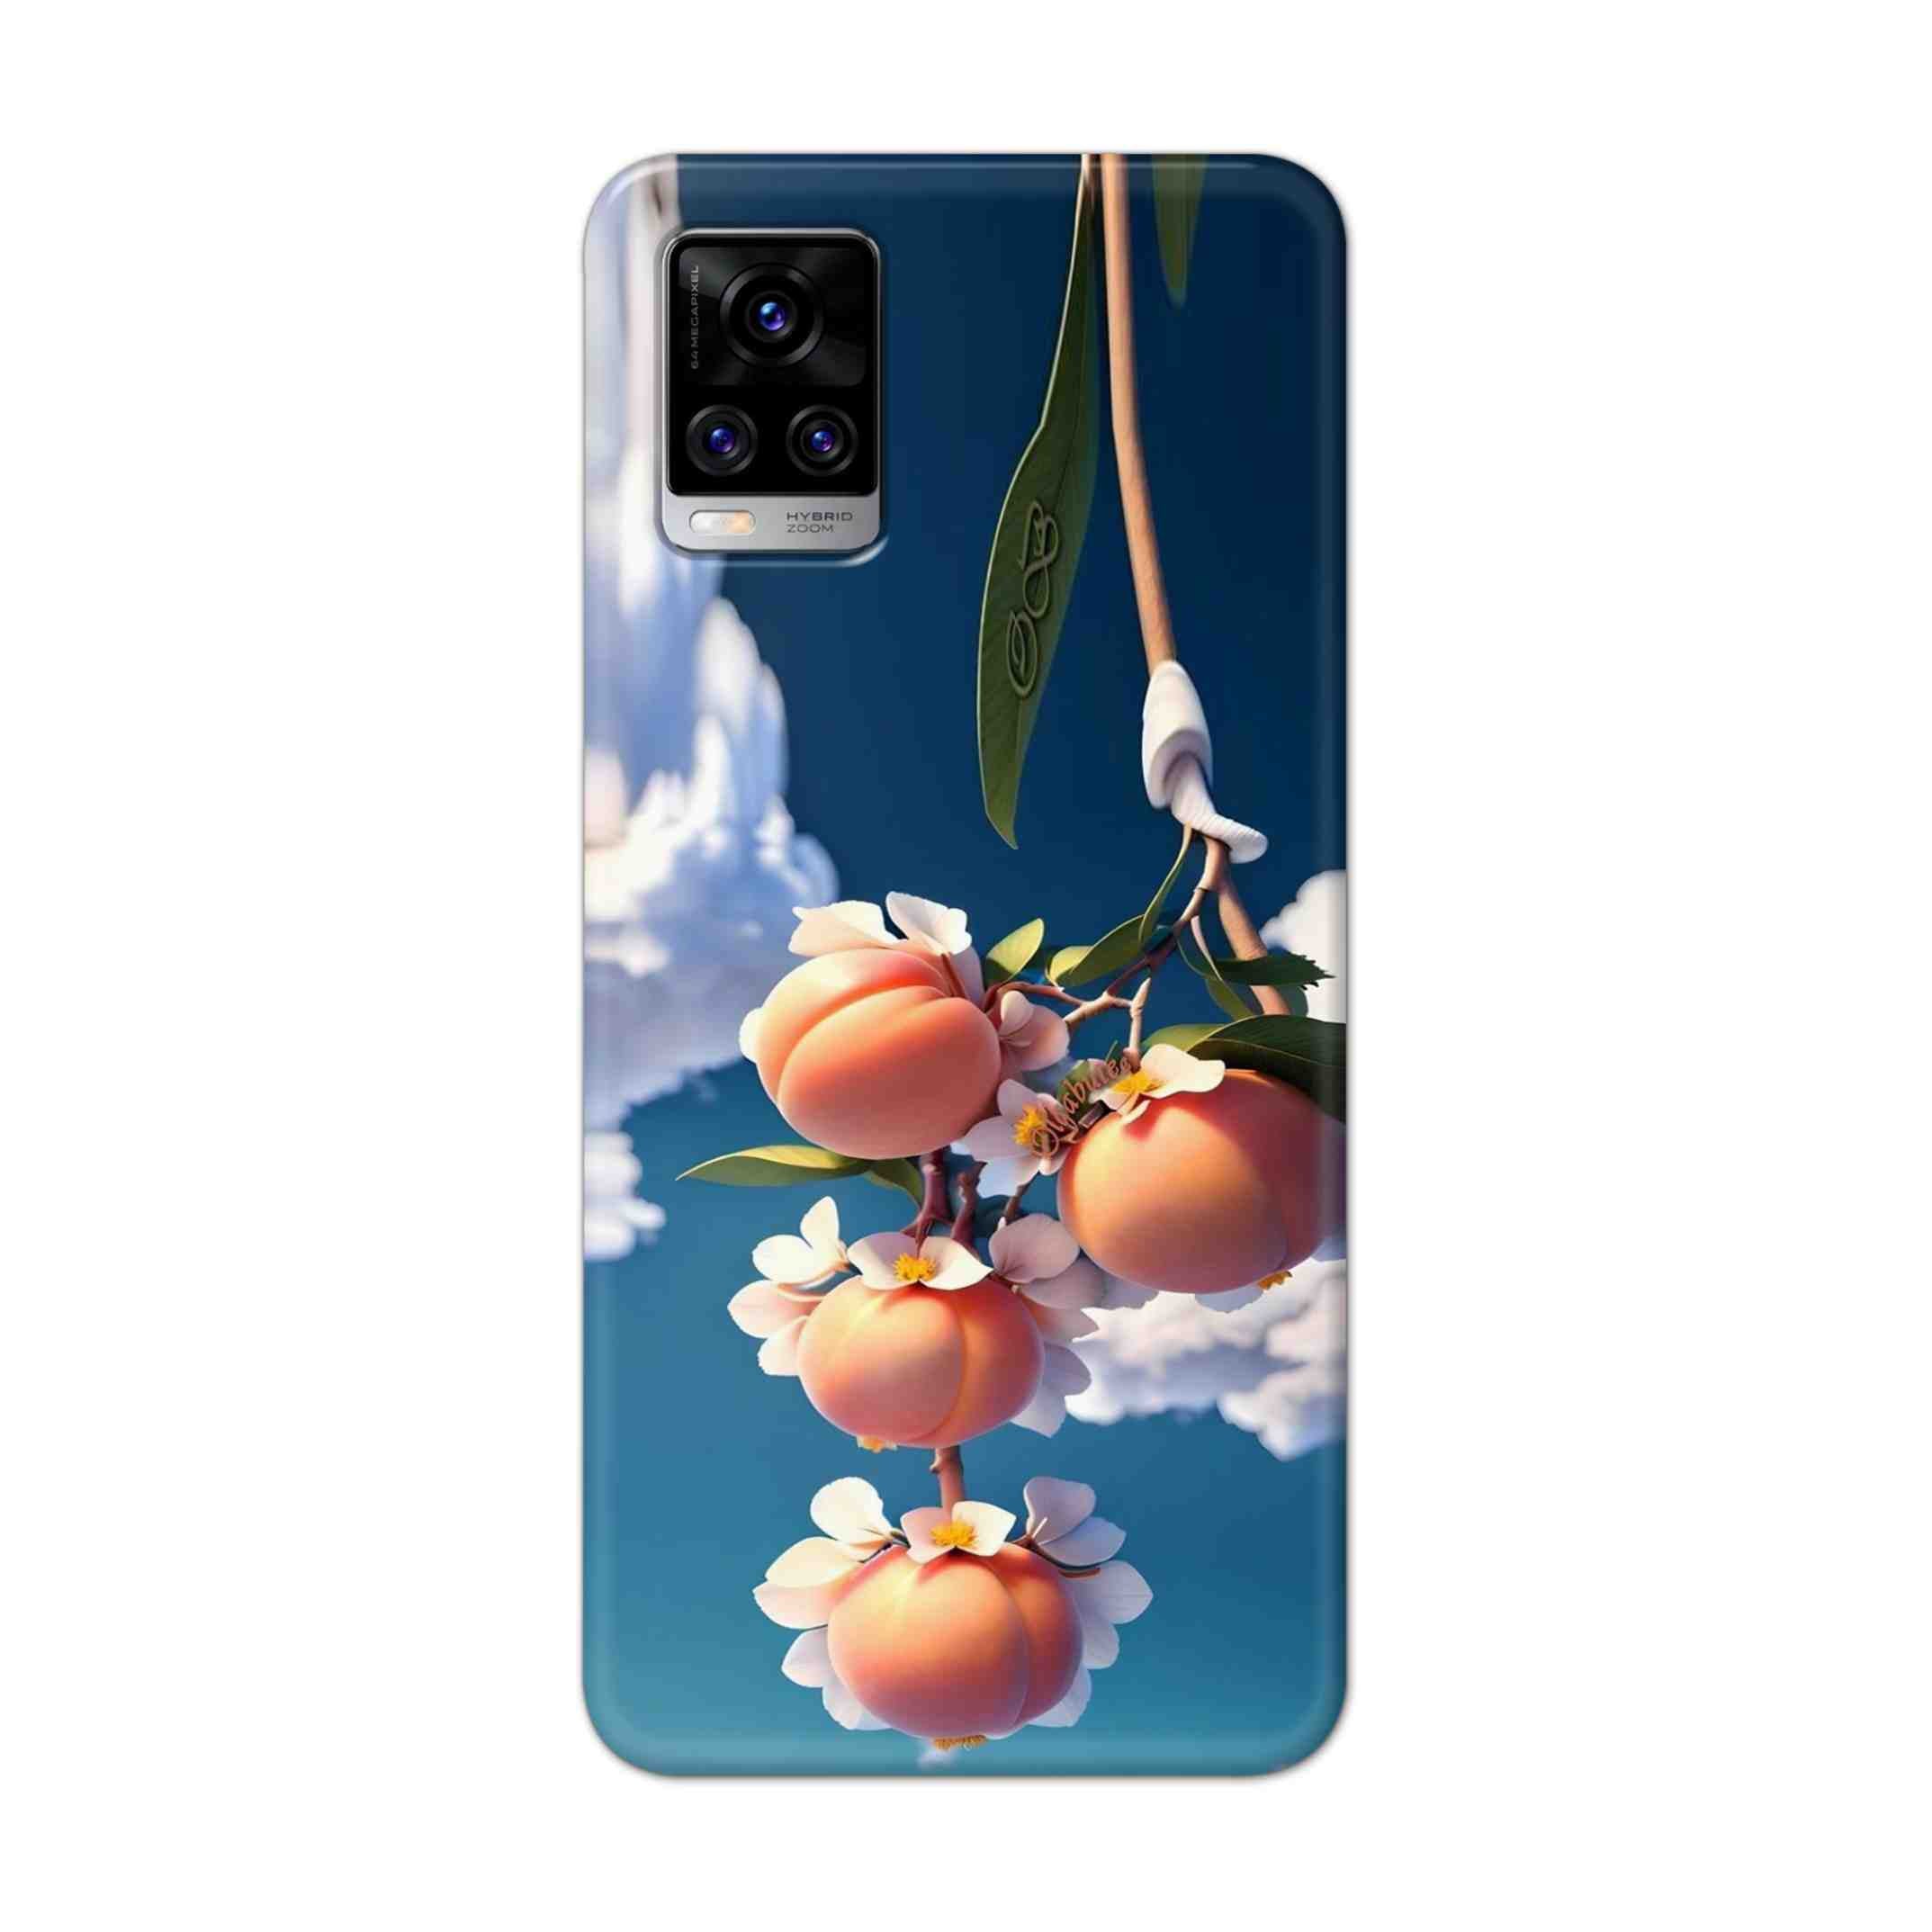 Buy Fruit Hard Back Mobile Phone Case Cover For Vivo V20 Pro Online